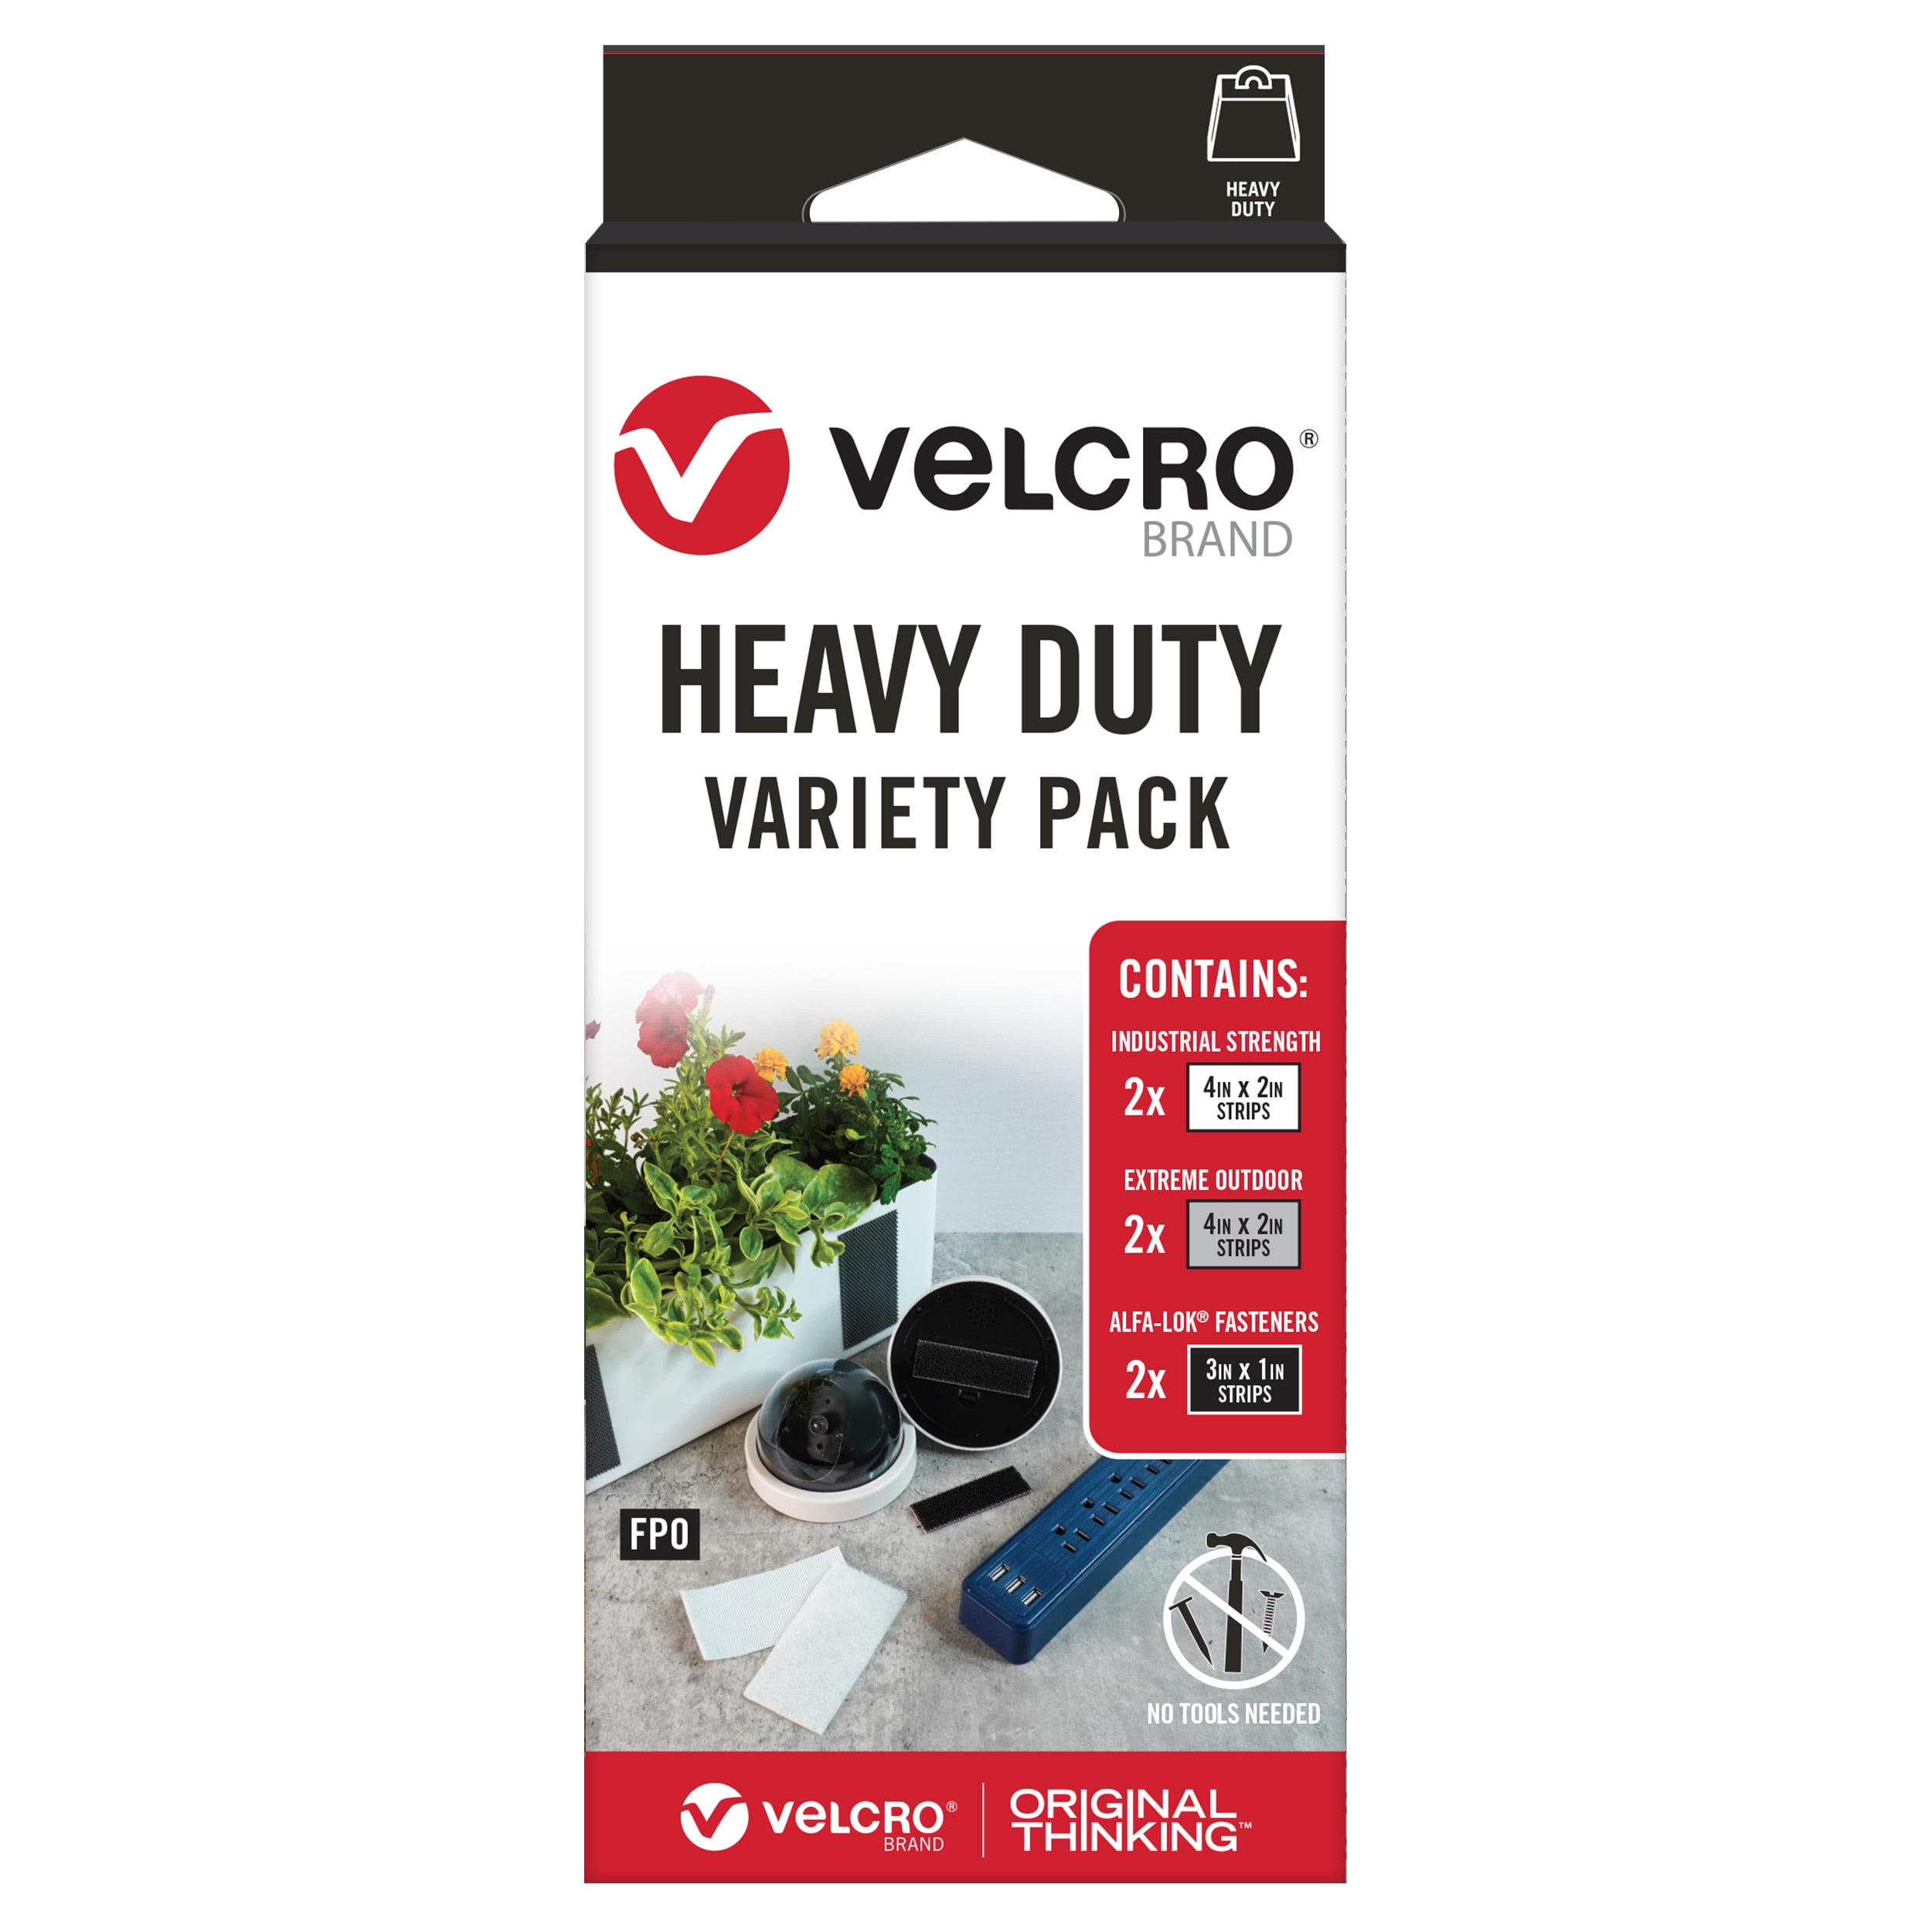 VELCRO Brand Heavy Duty Variety Pack White, Black, and Titanium